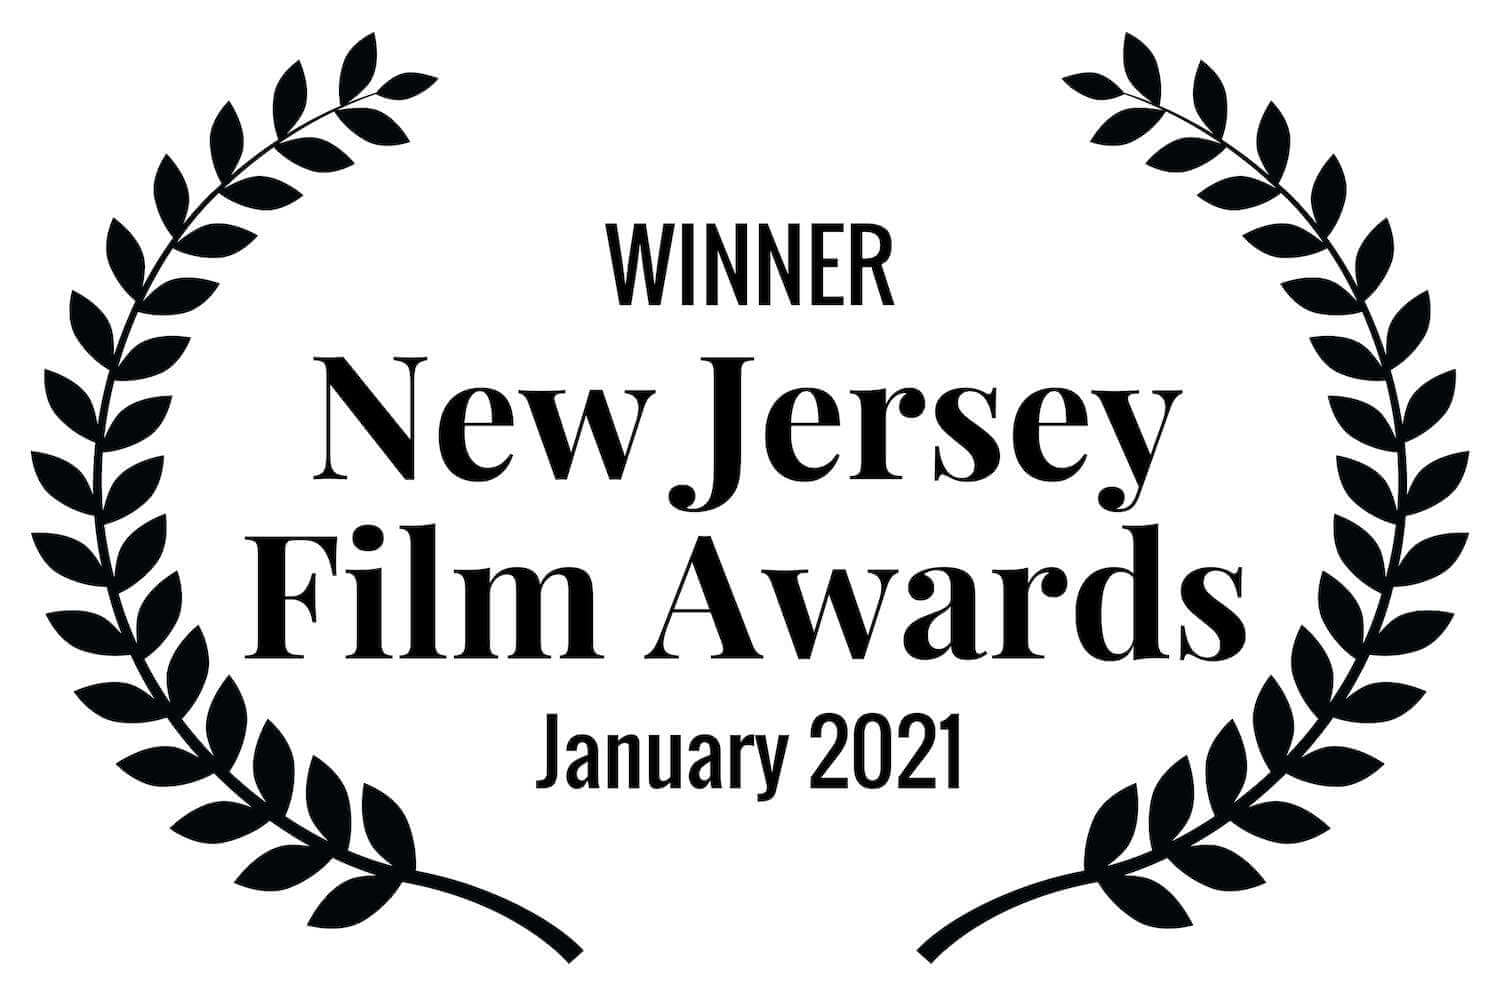 Winner New Jersey Film Awards January 2021